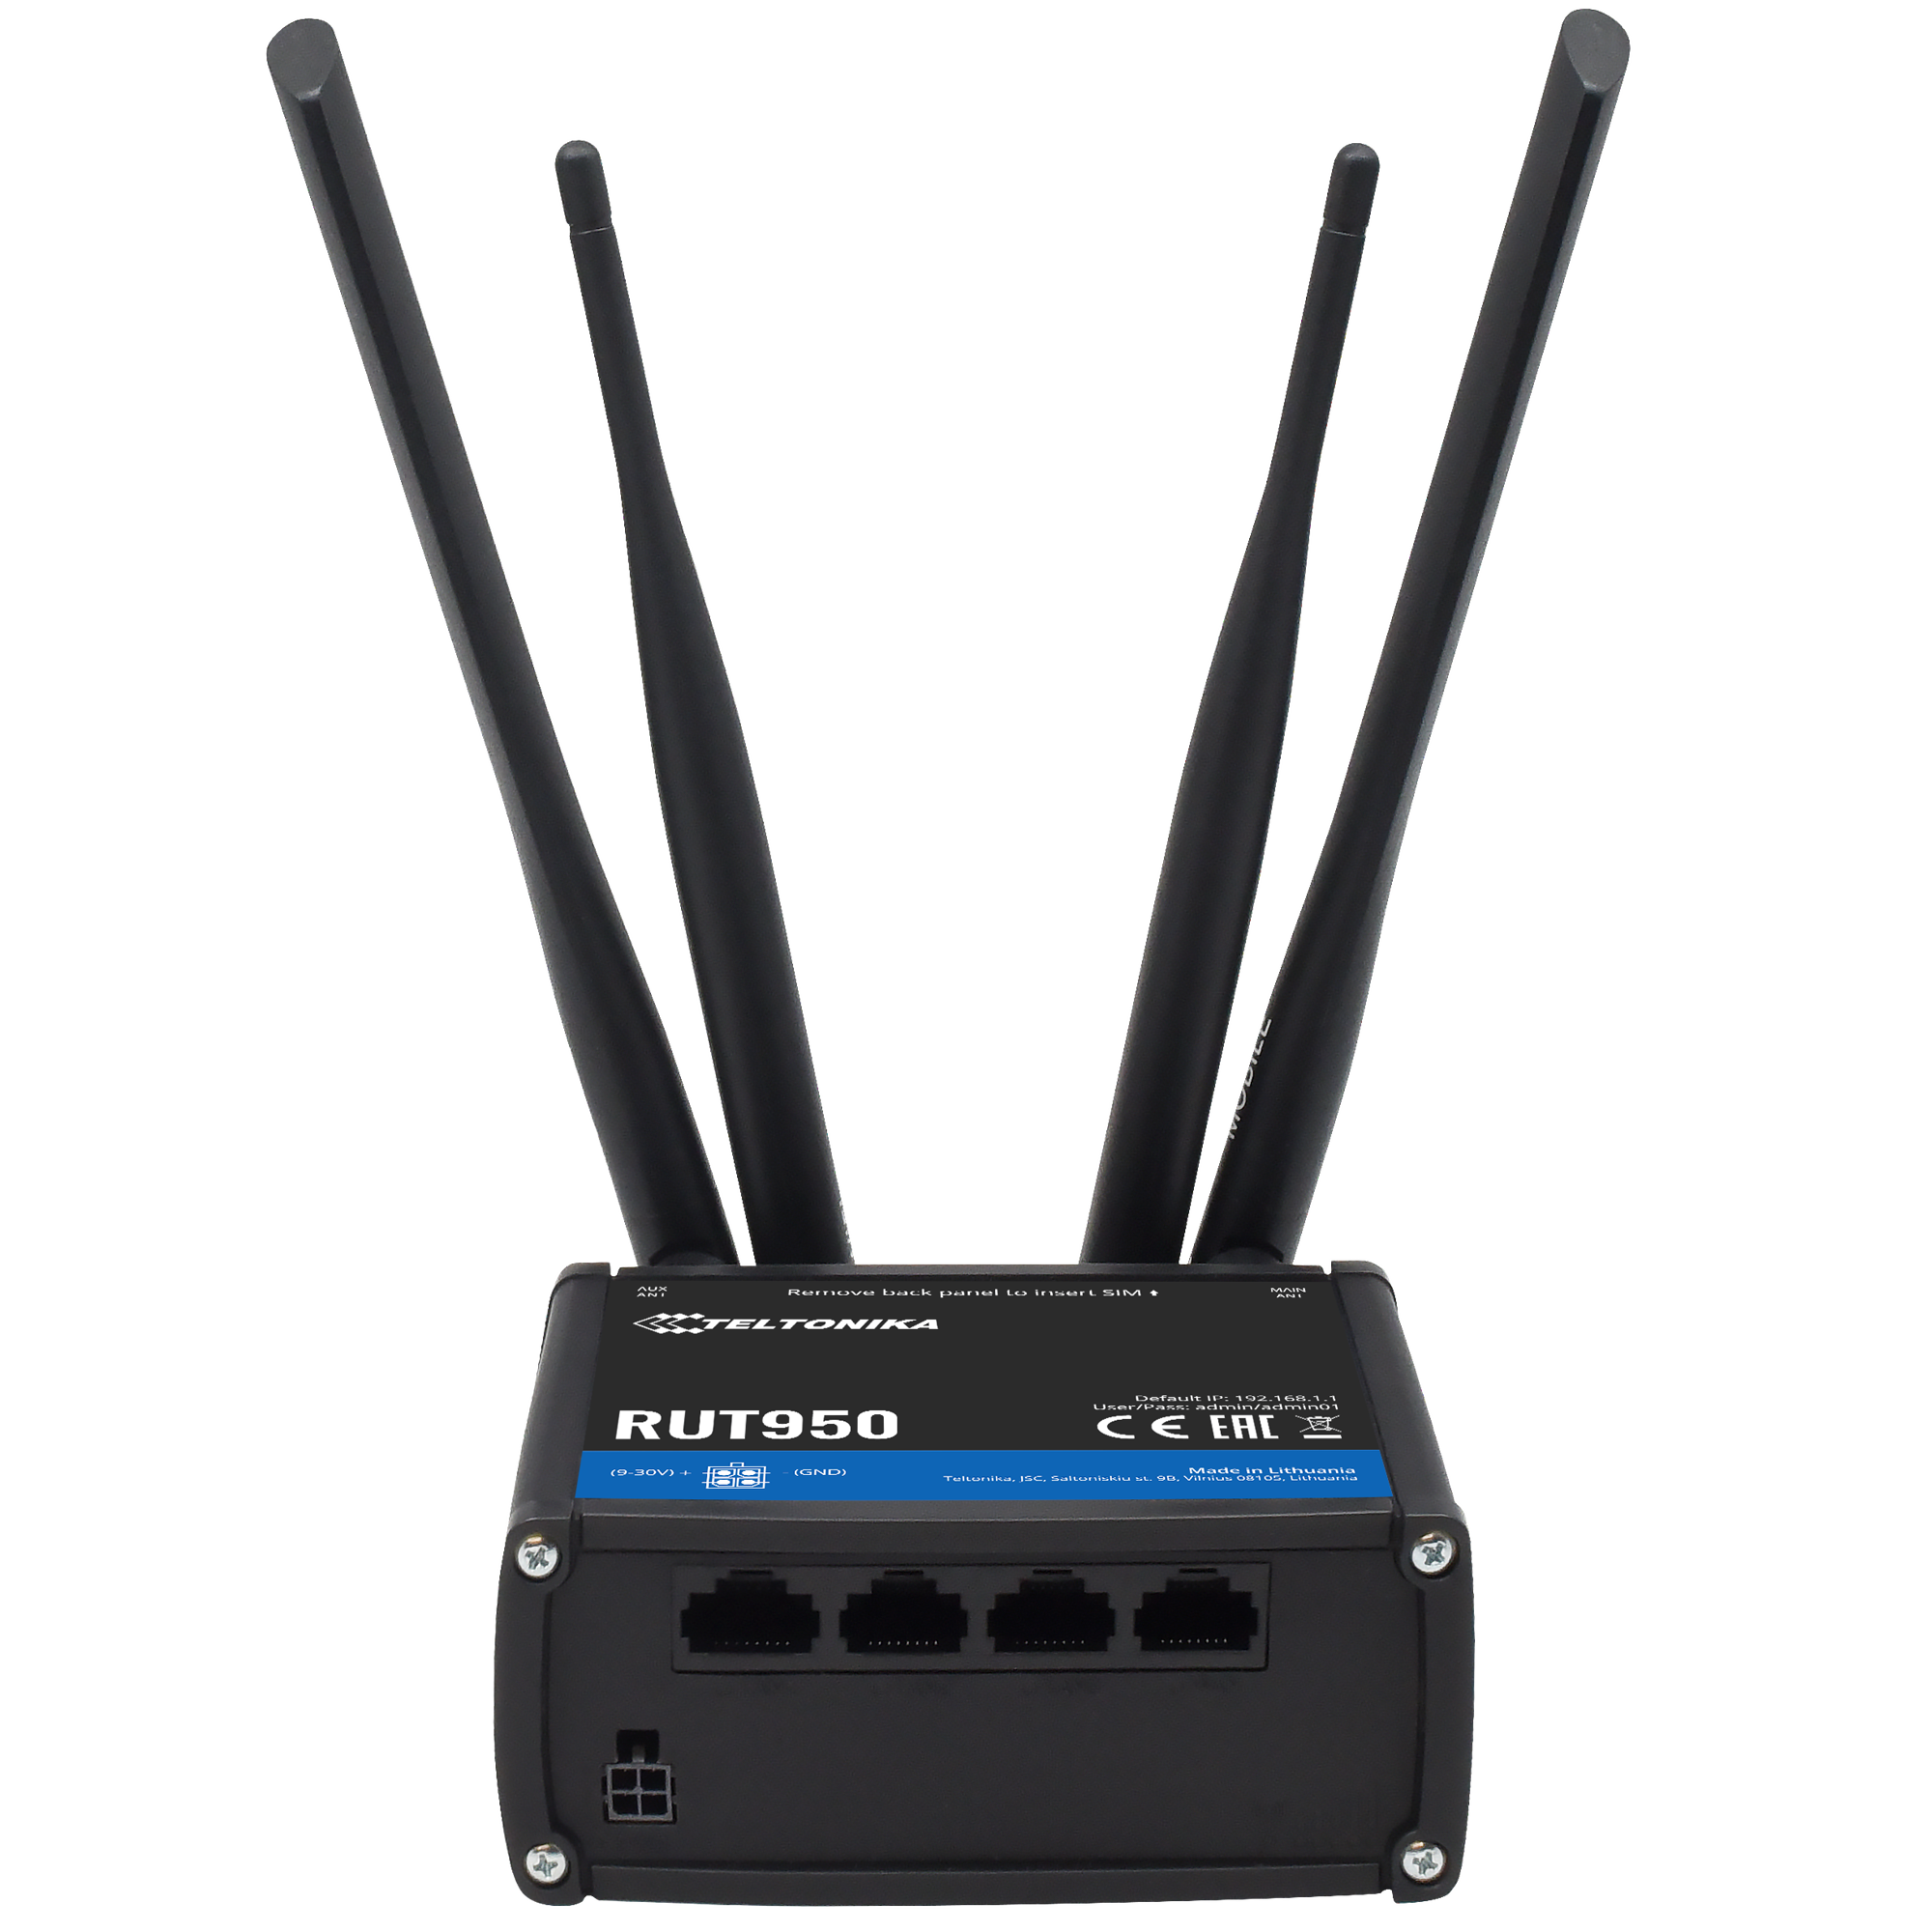 Teltonika Router 4G Industriale - 4 porte Ethernet RJ45 Fast Ethernet - Dual SIM 4G (LTE) Cat 4 fino a 150Mbps - 2x Ingressi + 2xSalidas Digitali - Wi-Fi 802.11b/g/n 2.4GHz - Alloggiamento in Alluminio